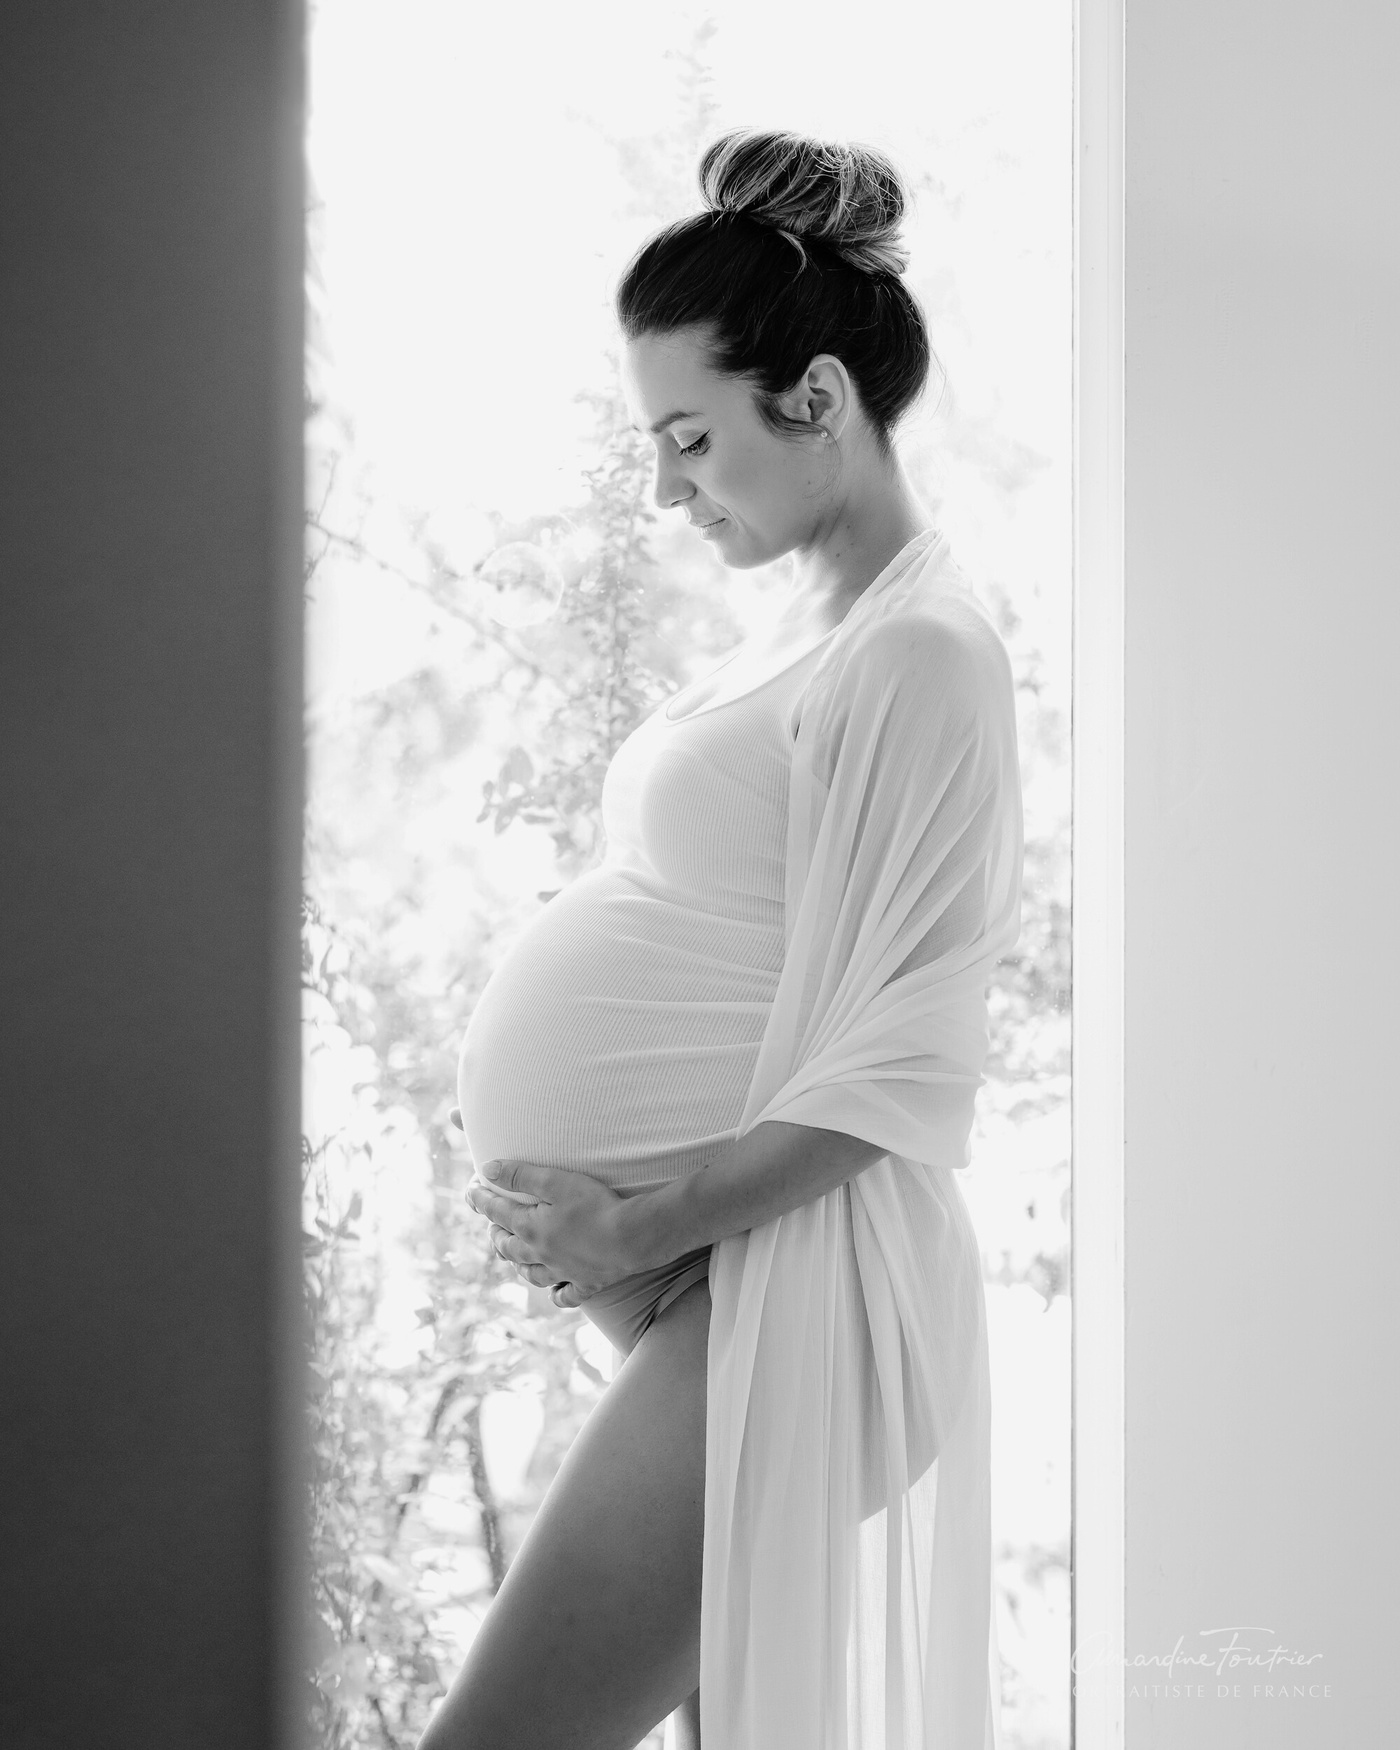 Femme enceinte 
enfant
Doula 
Naissance
Photo